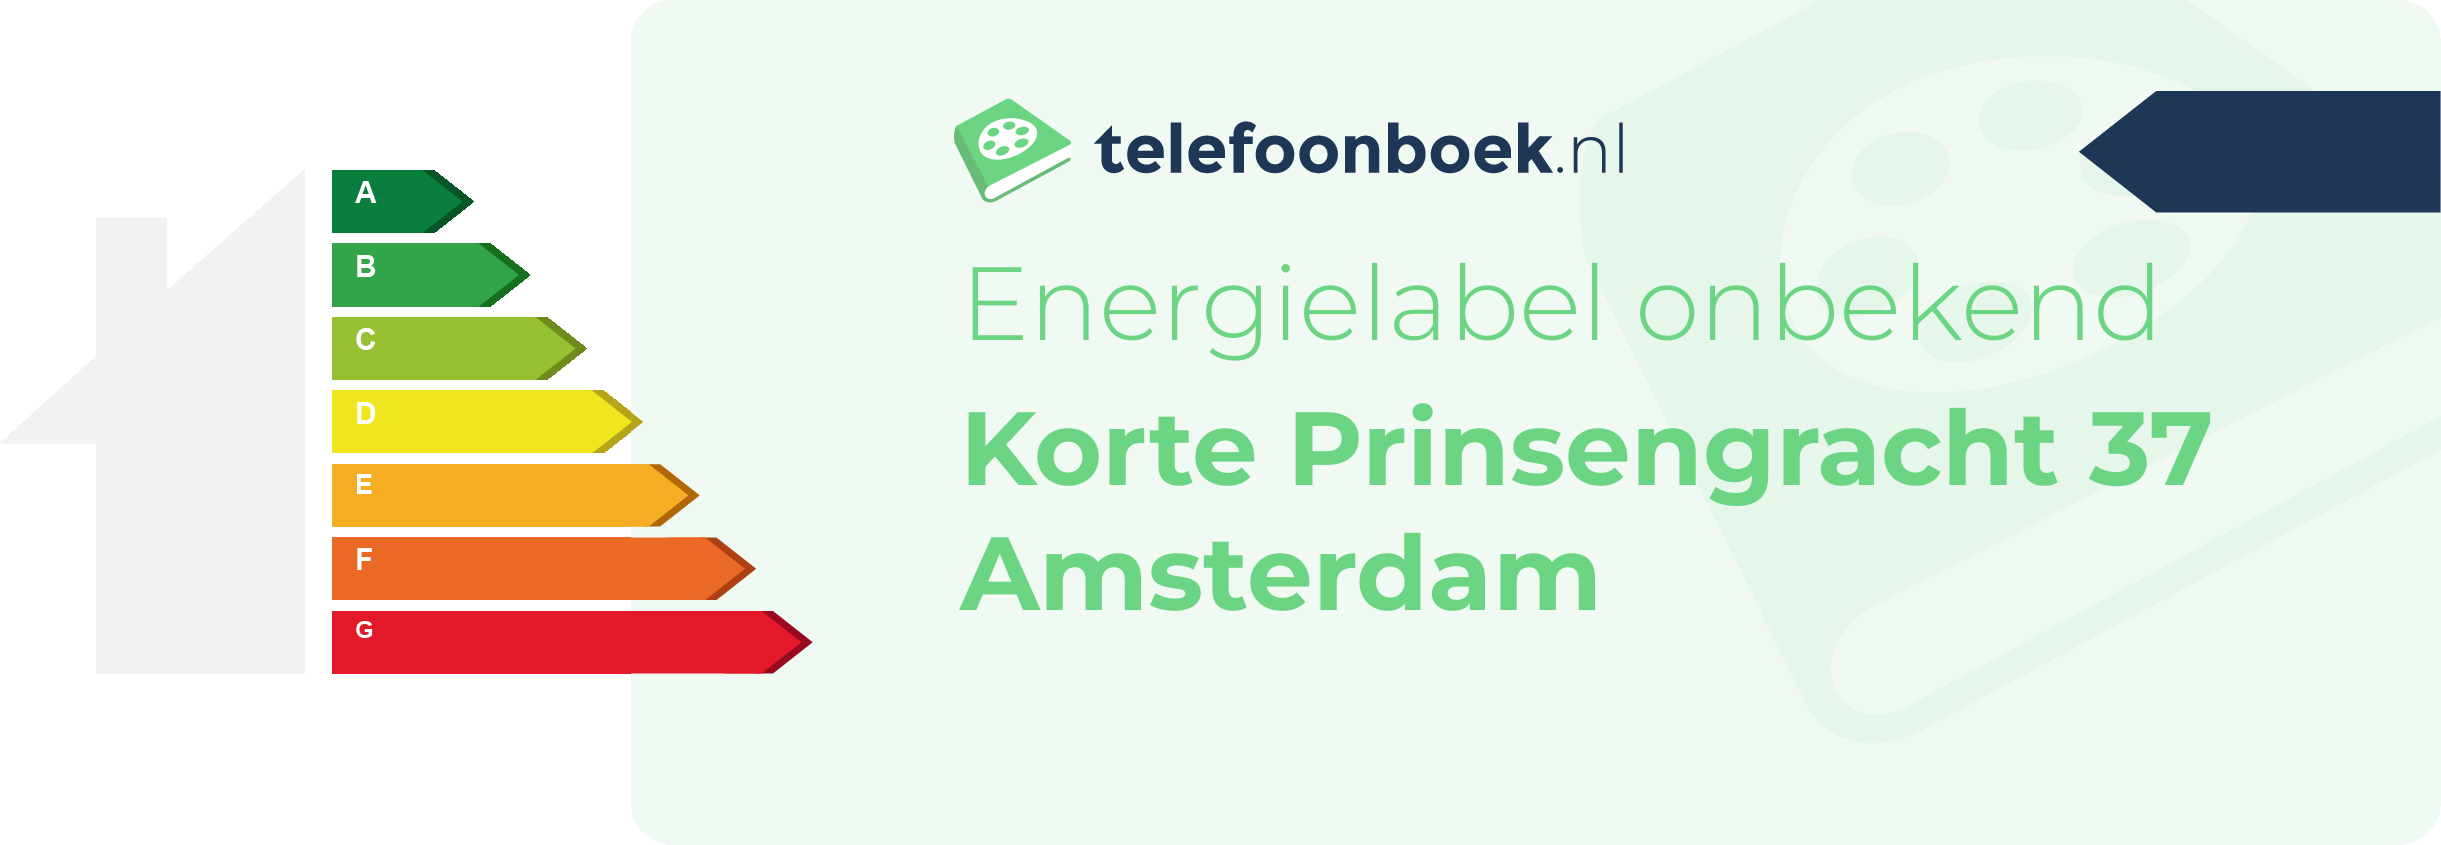 Energielabel Korte Prinsengracht 37 Amsterdam